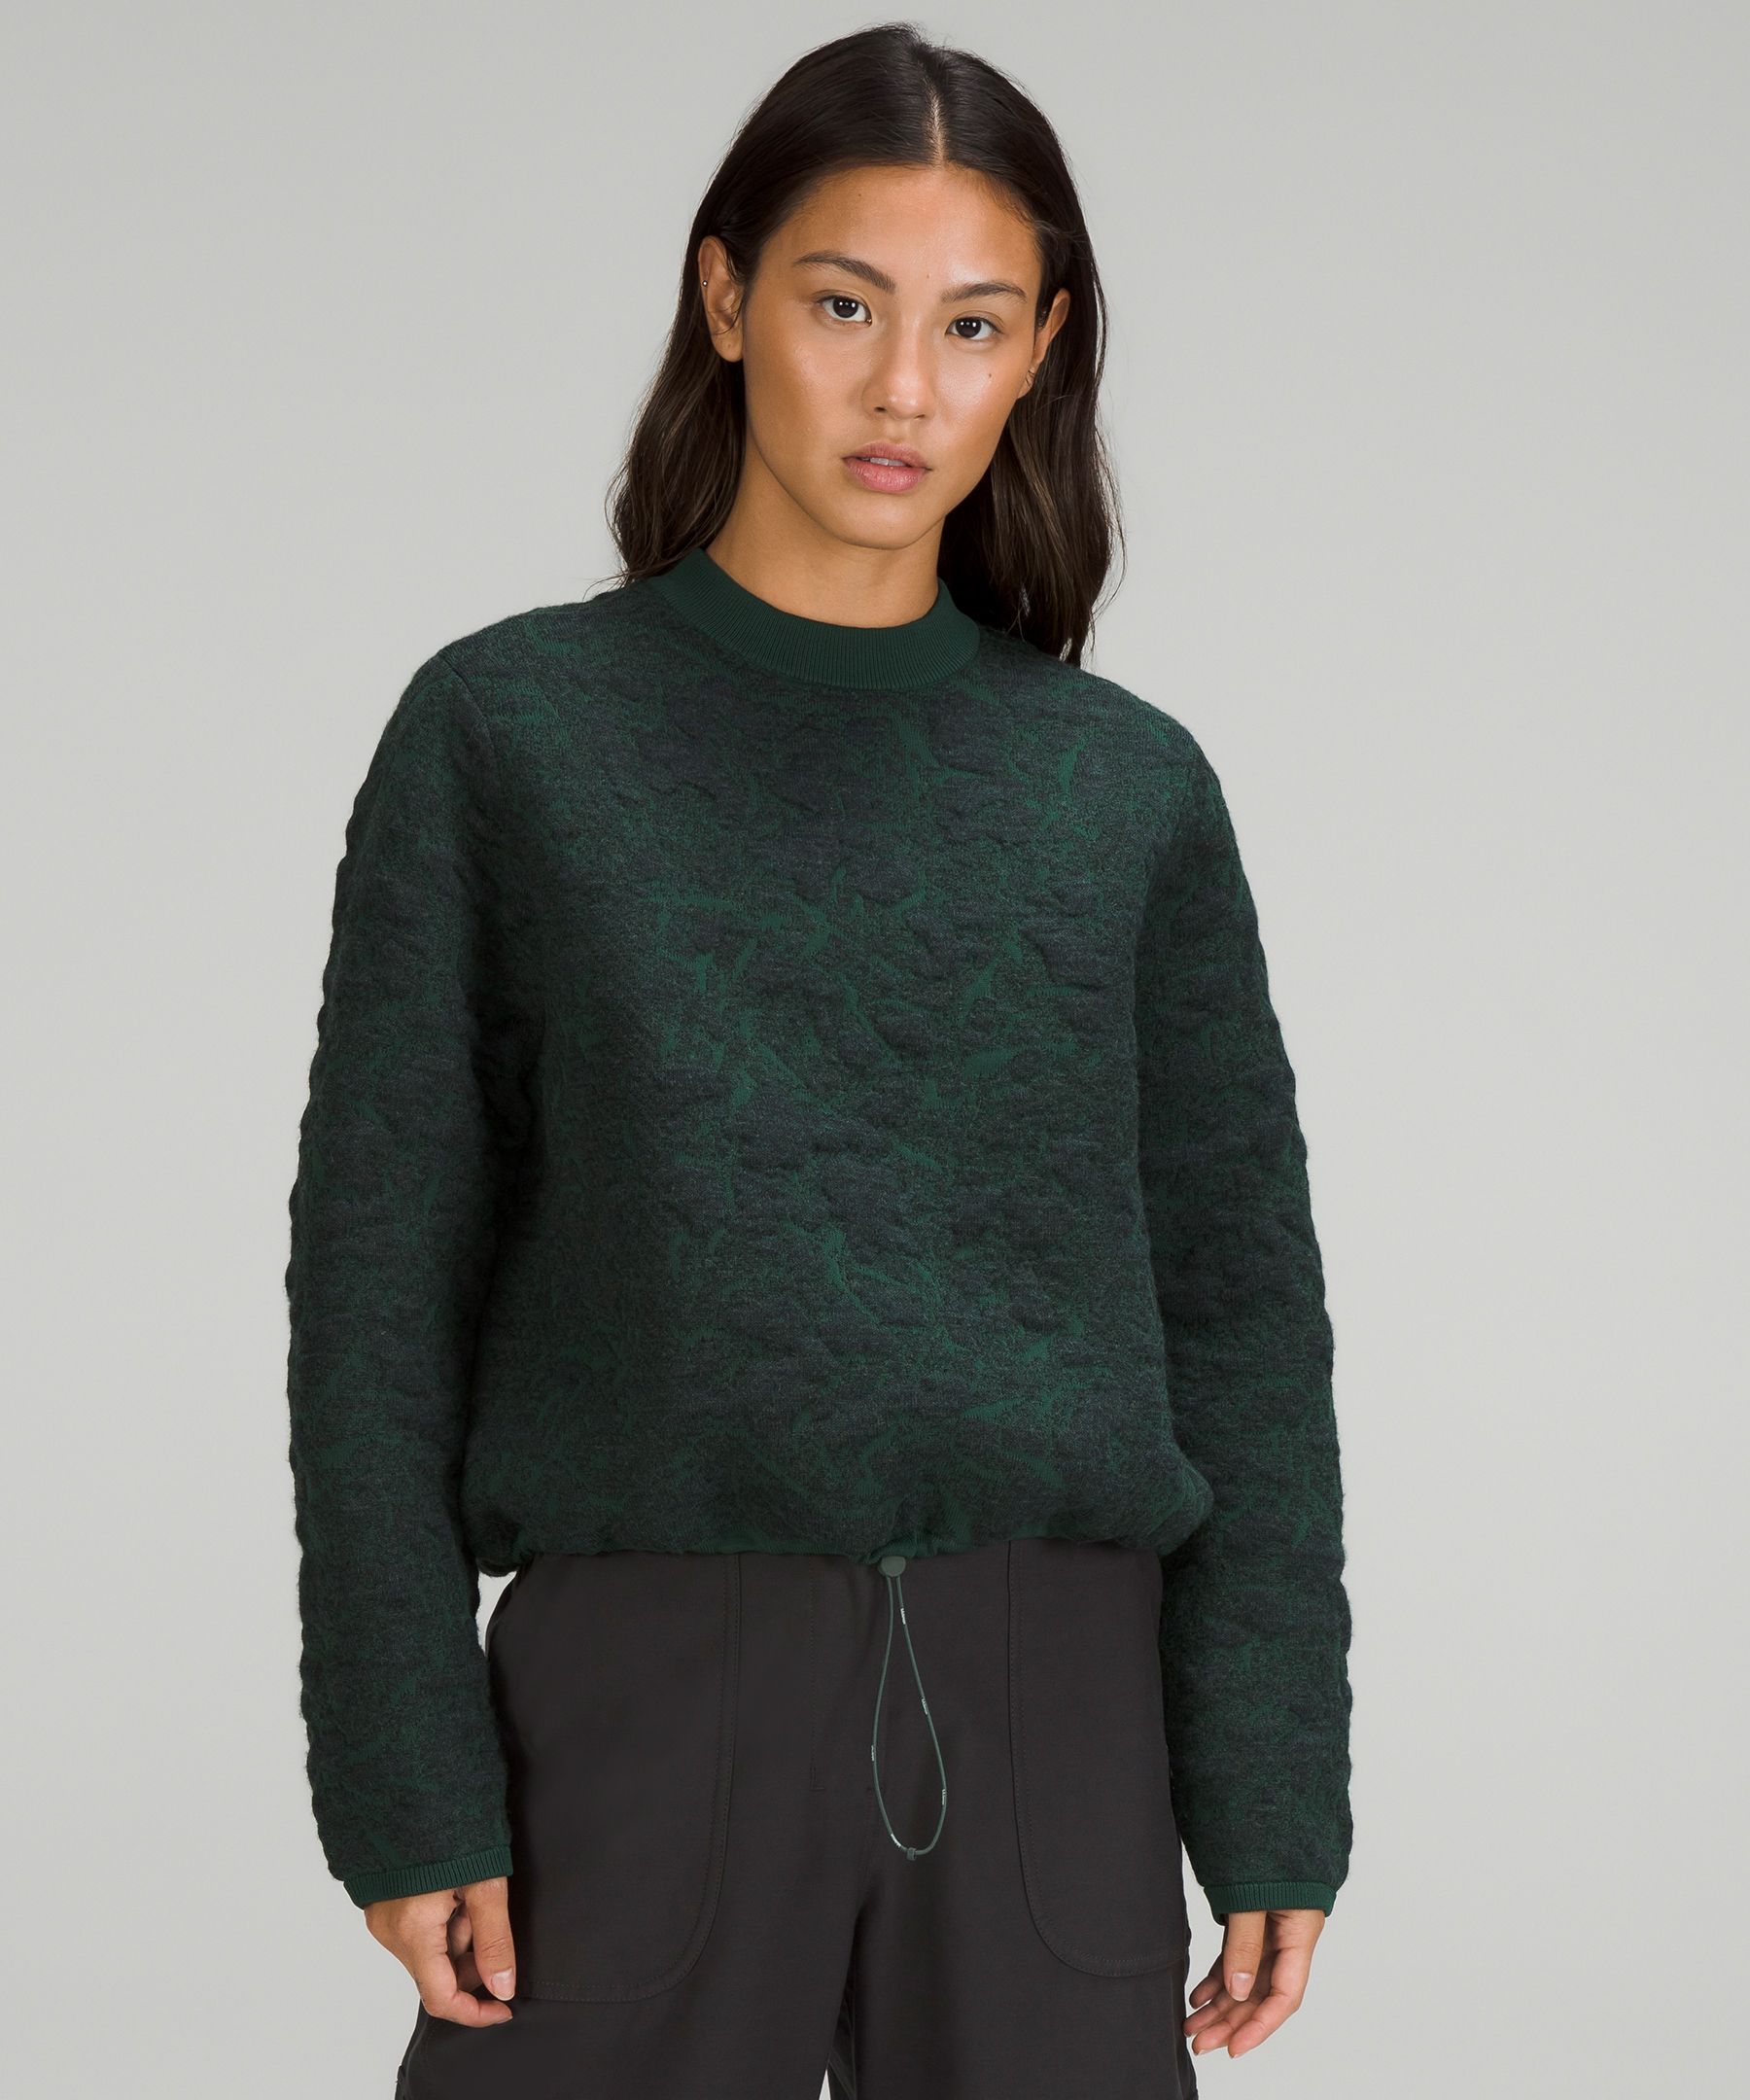 Lululemon Jacquard Multi-texture Crew Neck Sweater